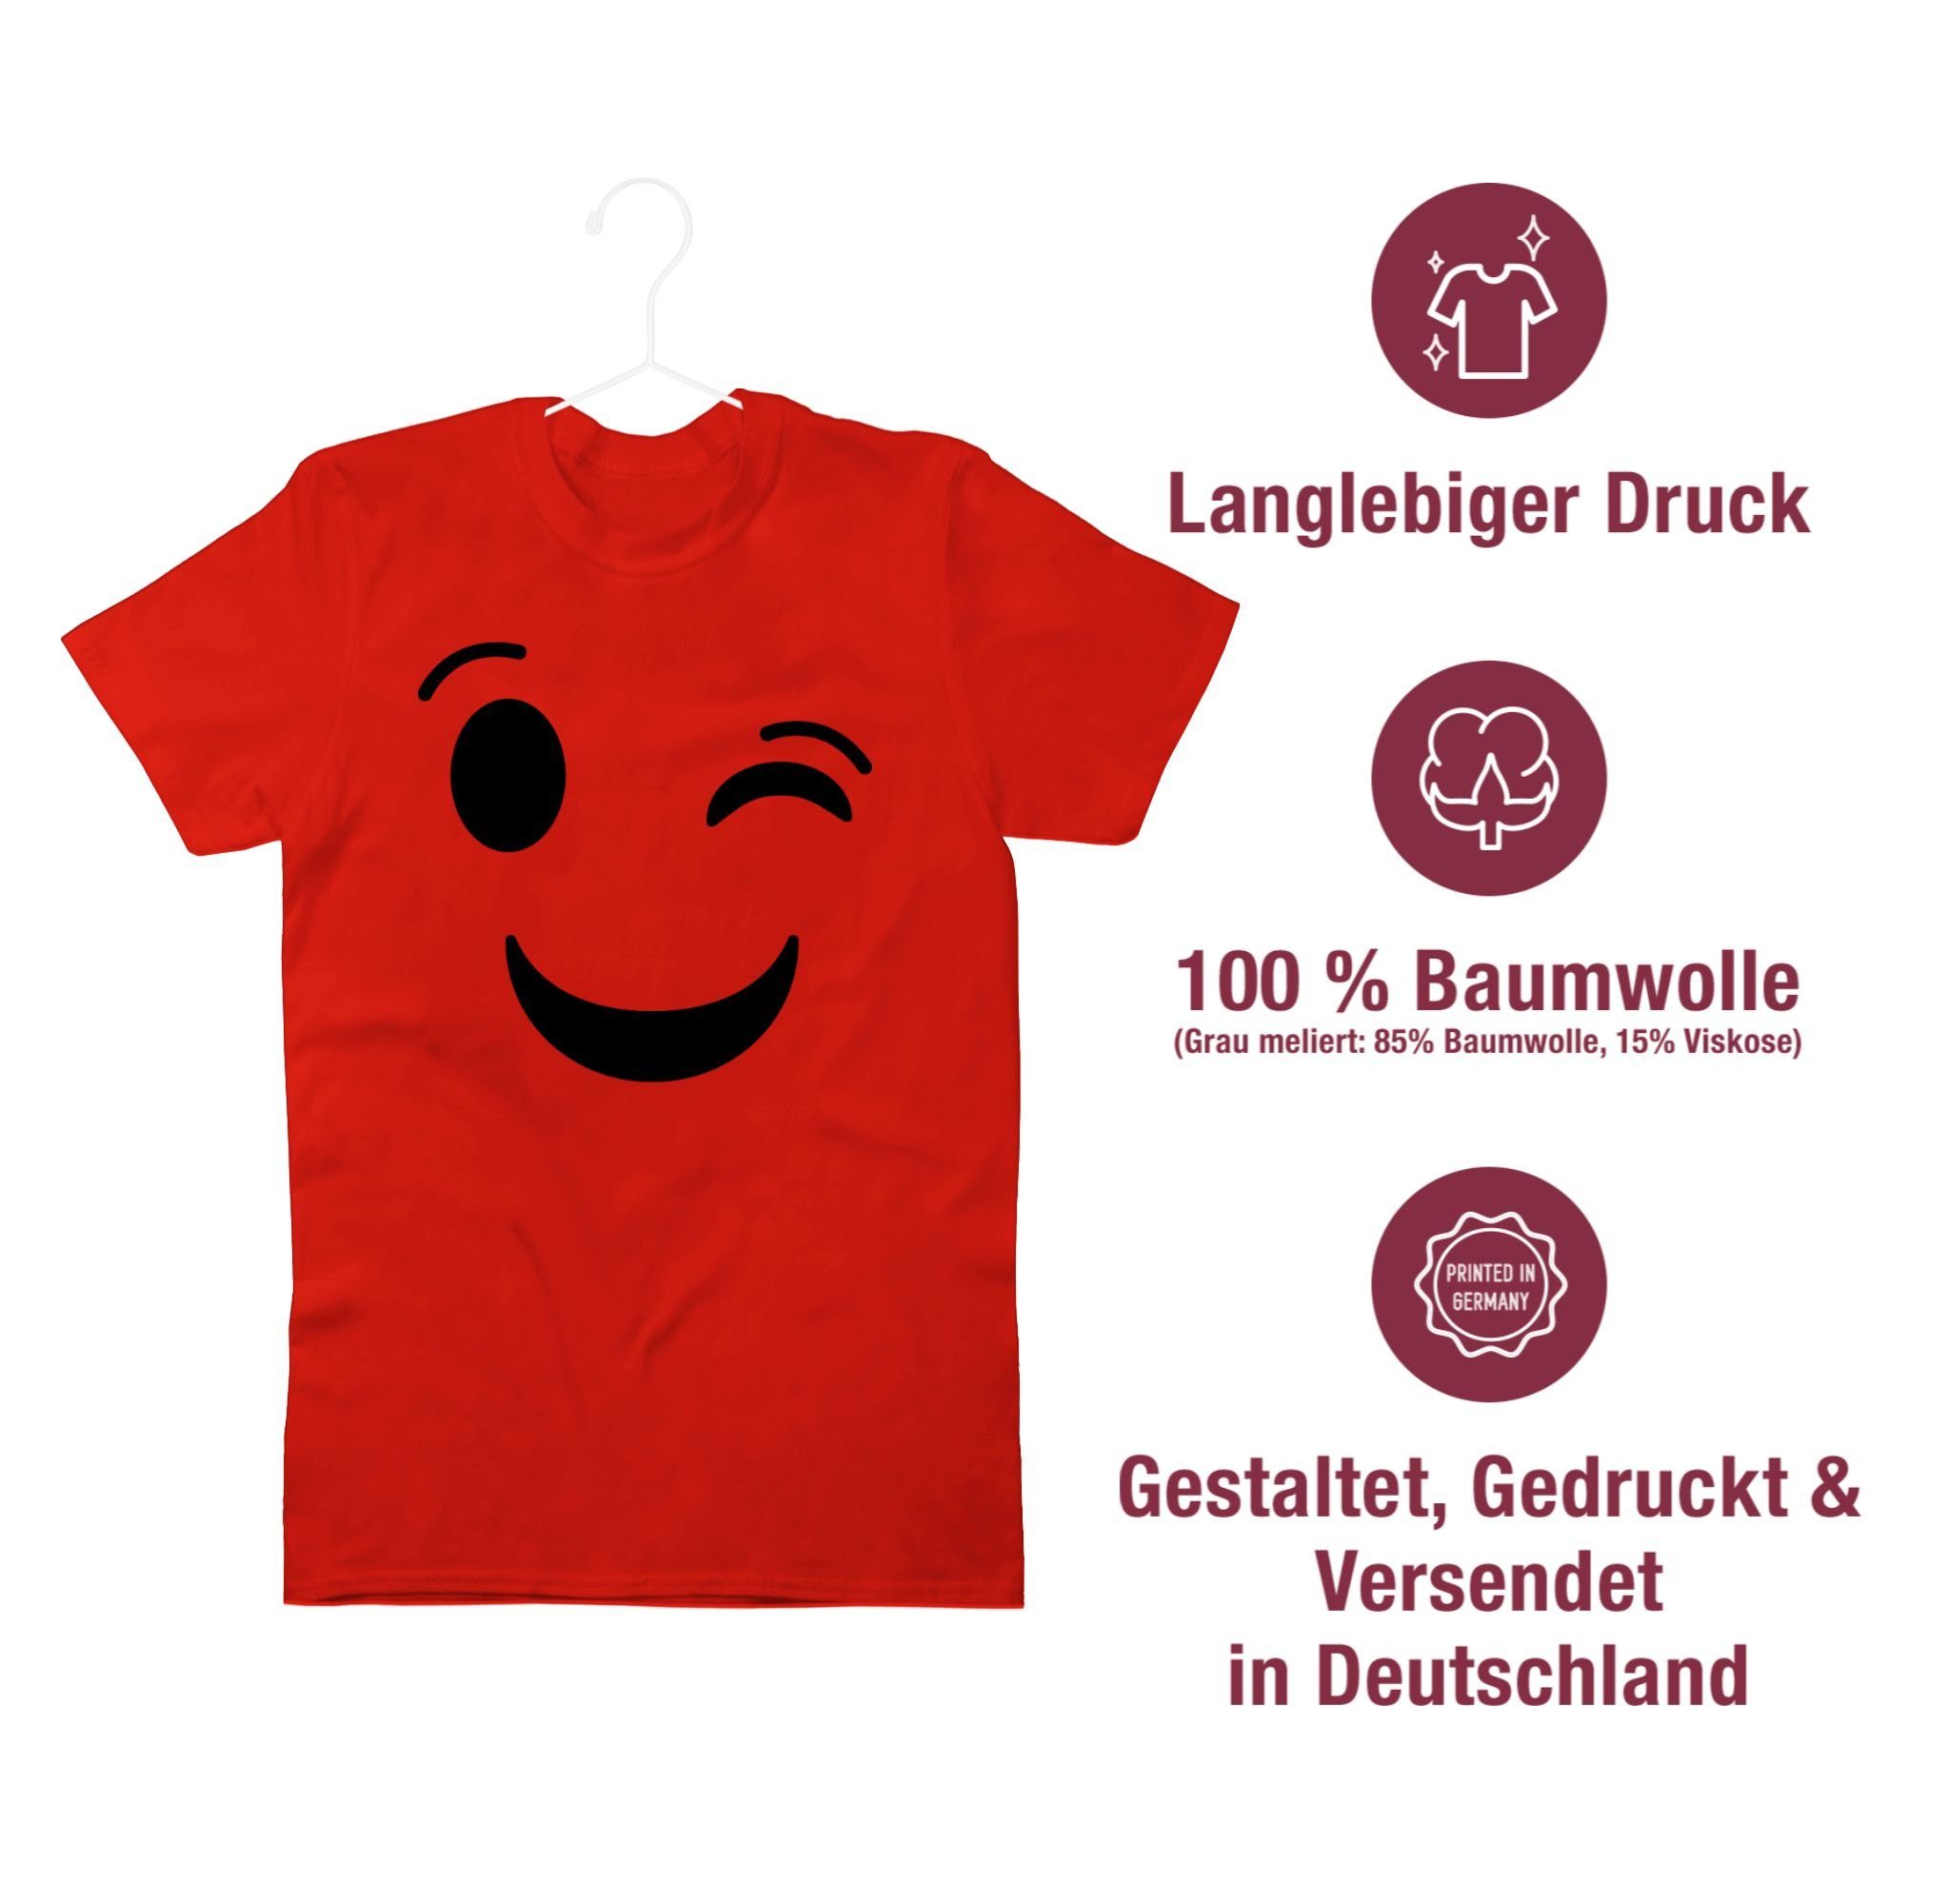 Shirtracer T-Shirt Outfit 2 Emoticon Karneval Zwinker Karneval Rot